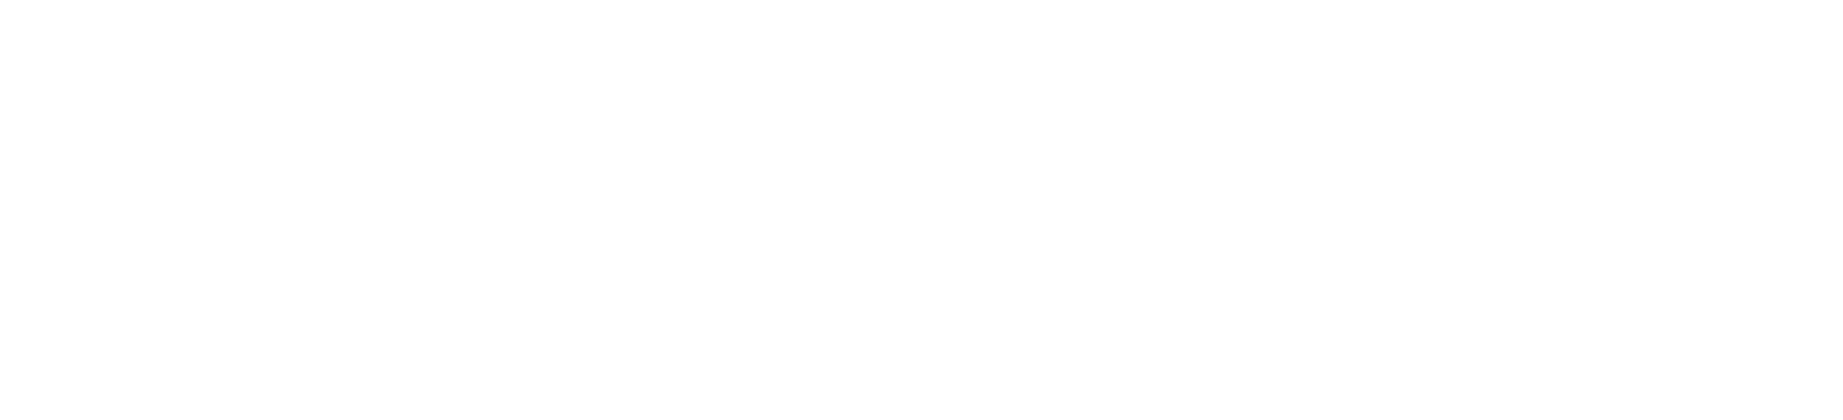 Avanza Media Group